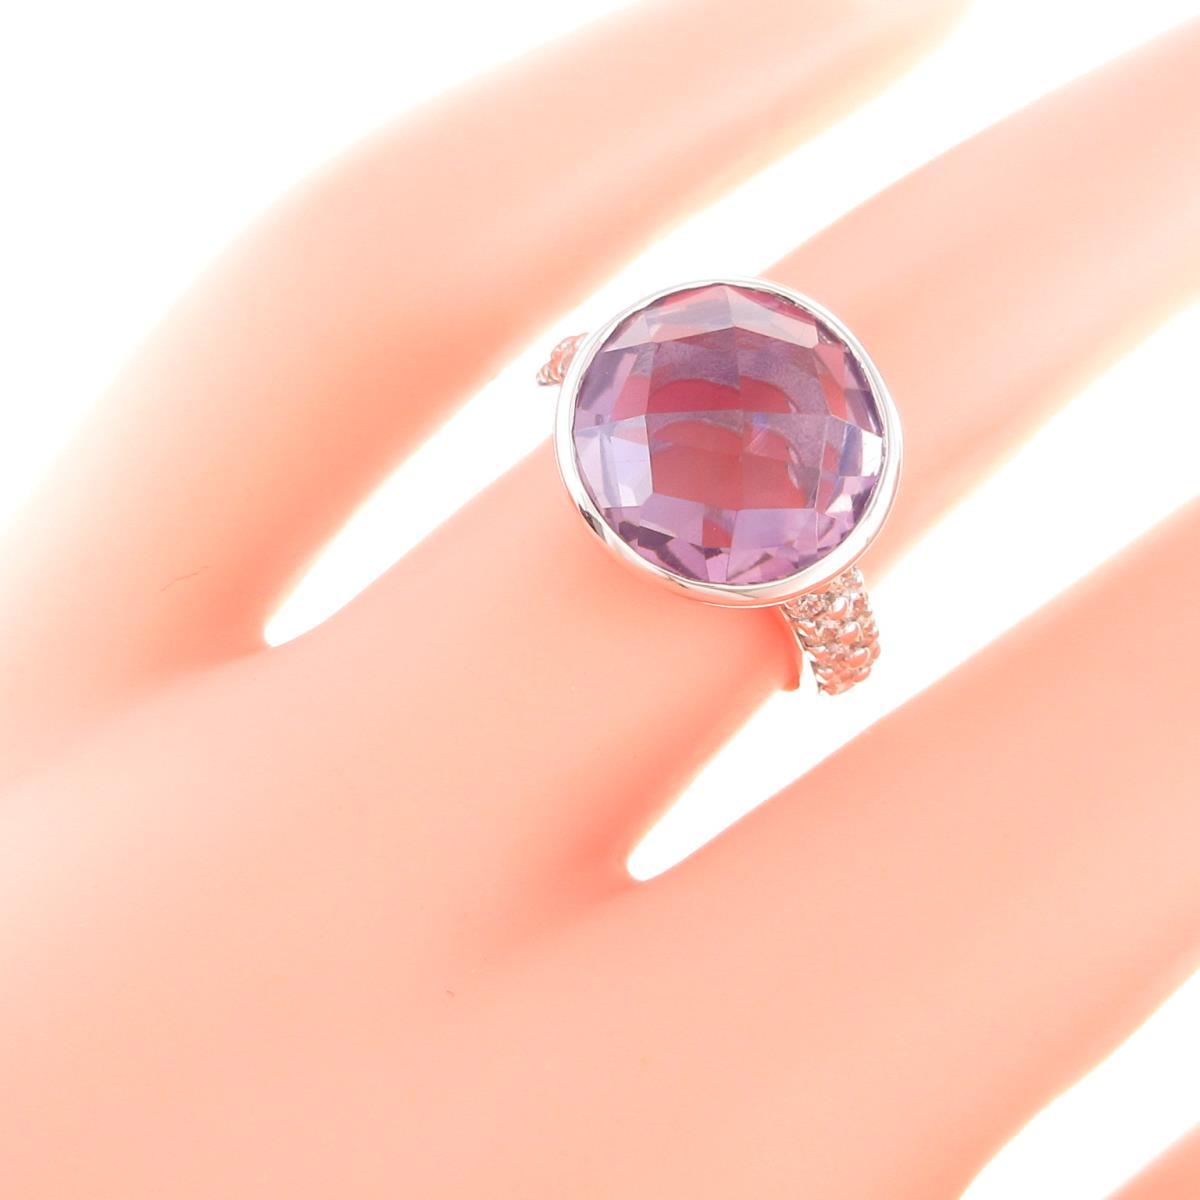 KOMEHYO |K18WG紫水晶串|珠宝|戒指|【官方】日本最大的再利用百货公司